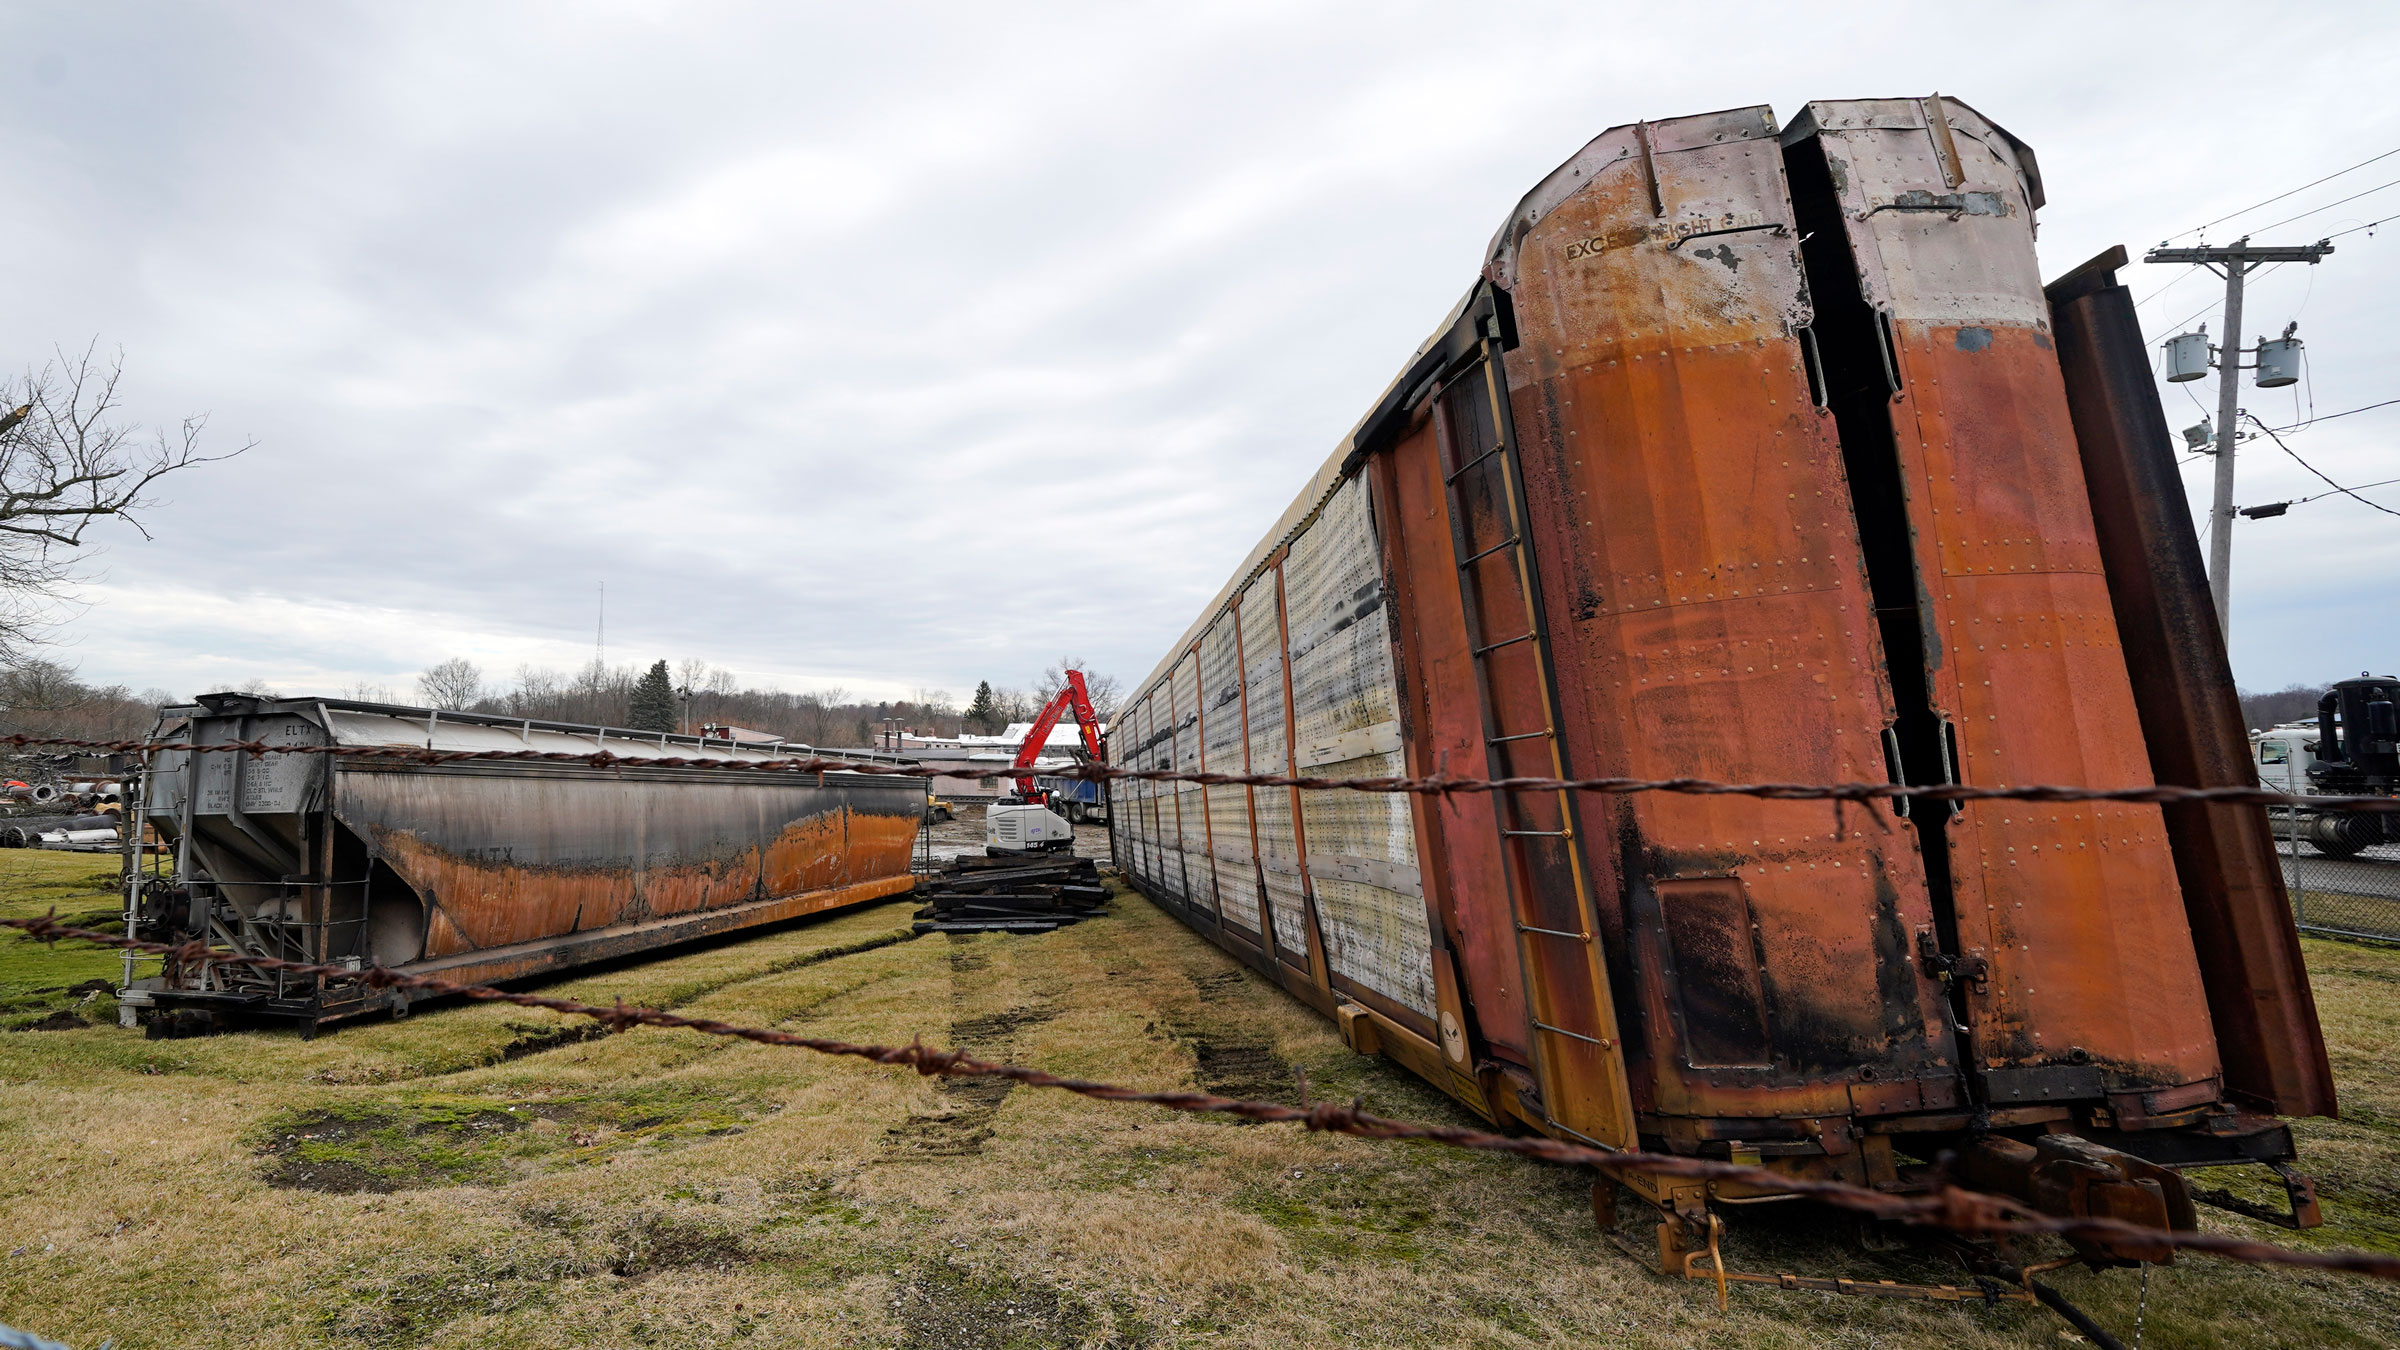 Railcars are seen last week in East Palestine, Ohio.